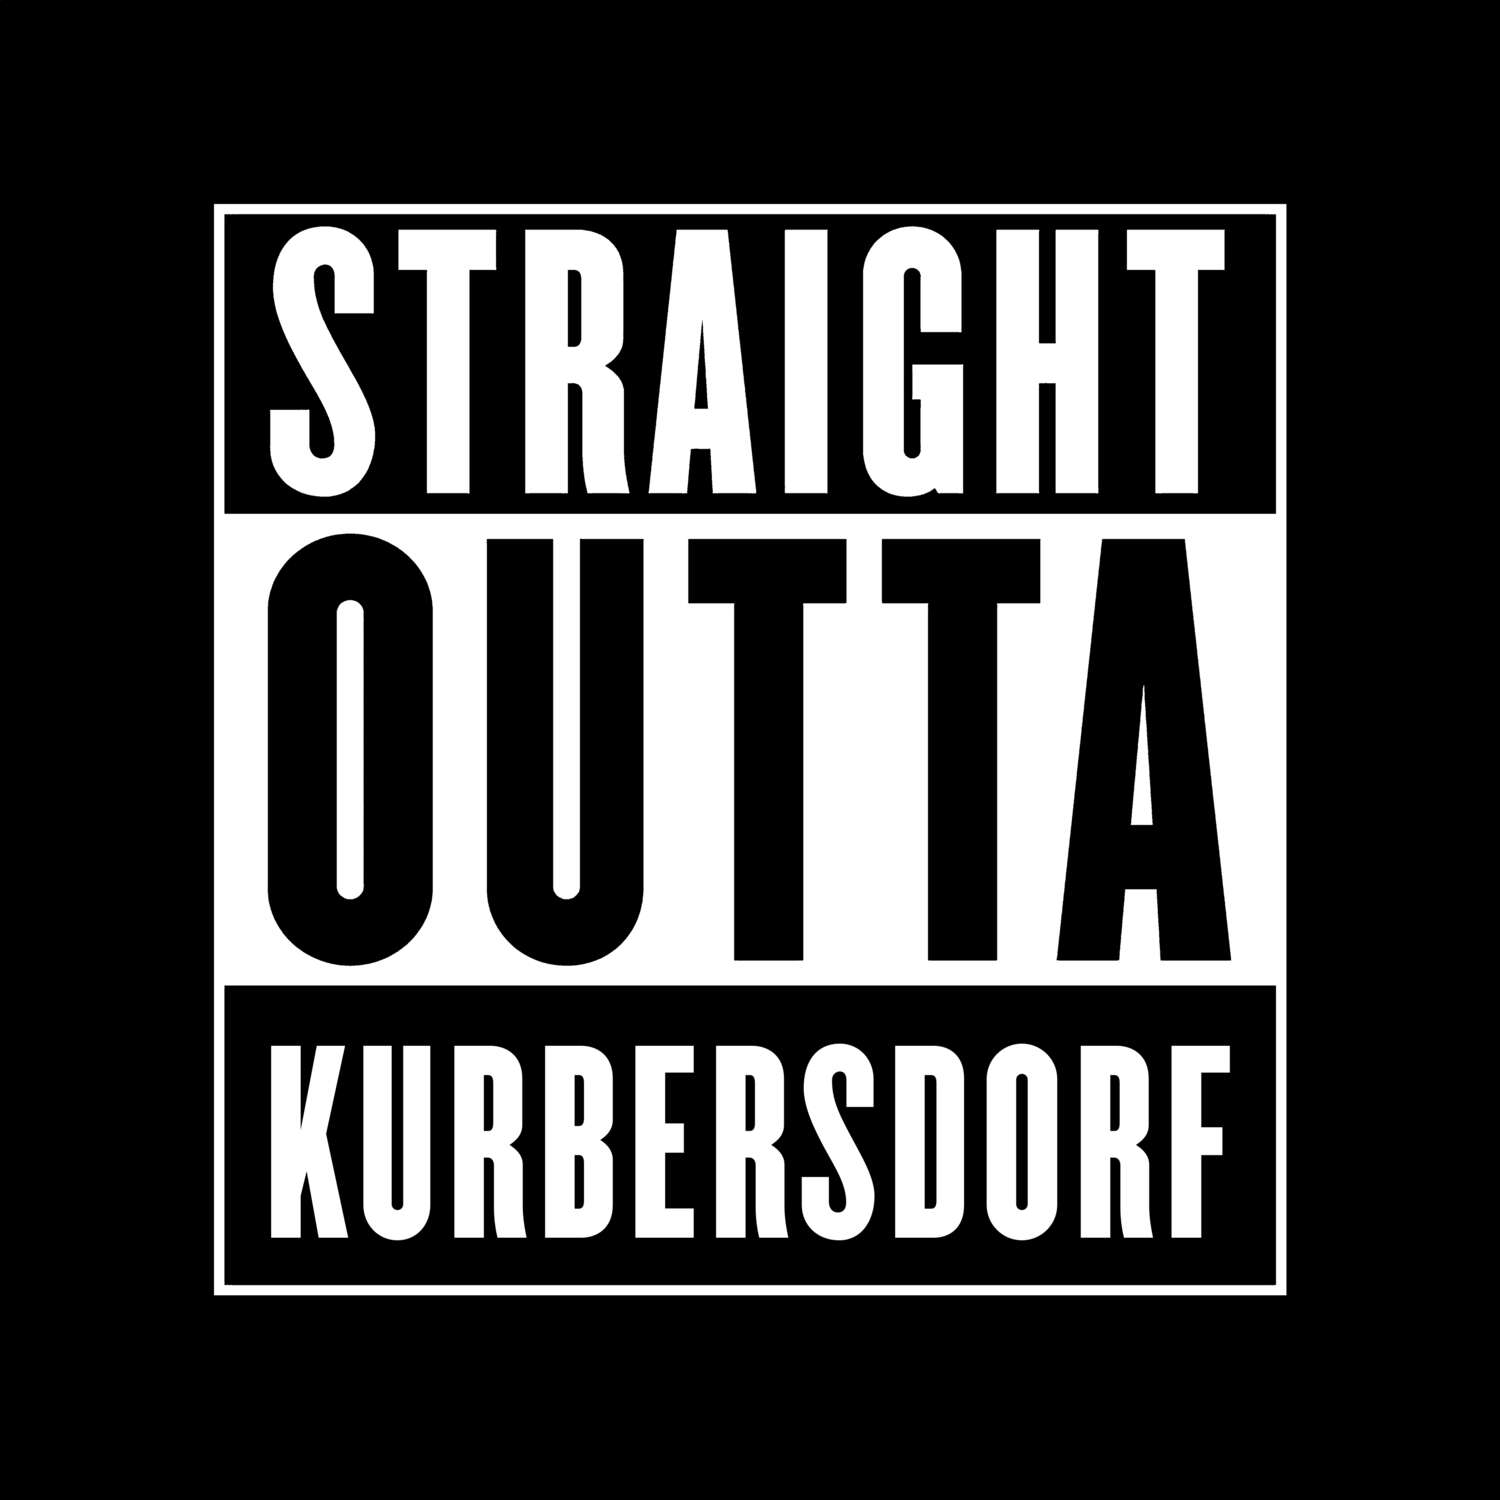 Kurbersdorf T-Shirt »Straight Outta«